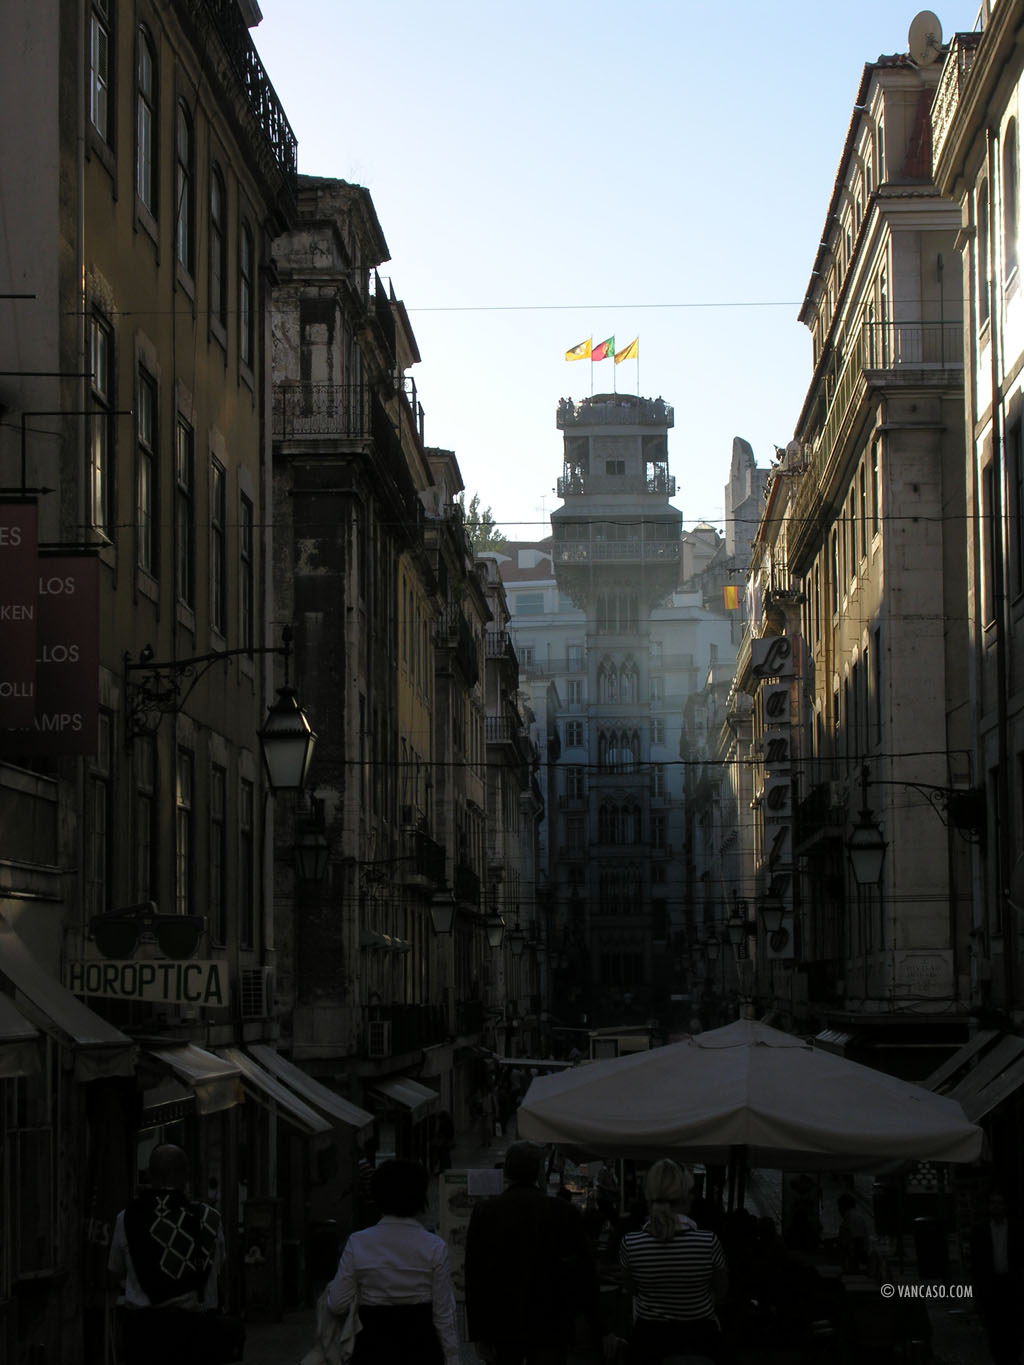 View of the Santa Justa Lift from R. de Sant Justa in Lisbon, Portigal